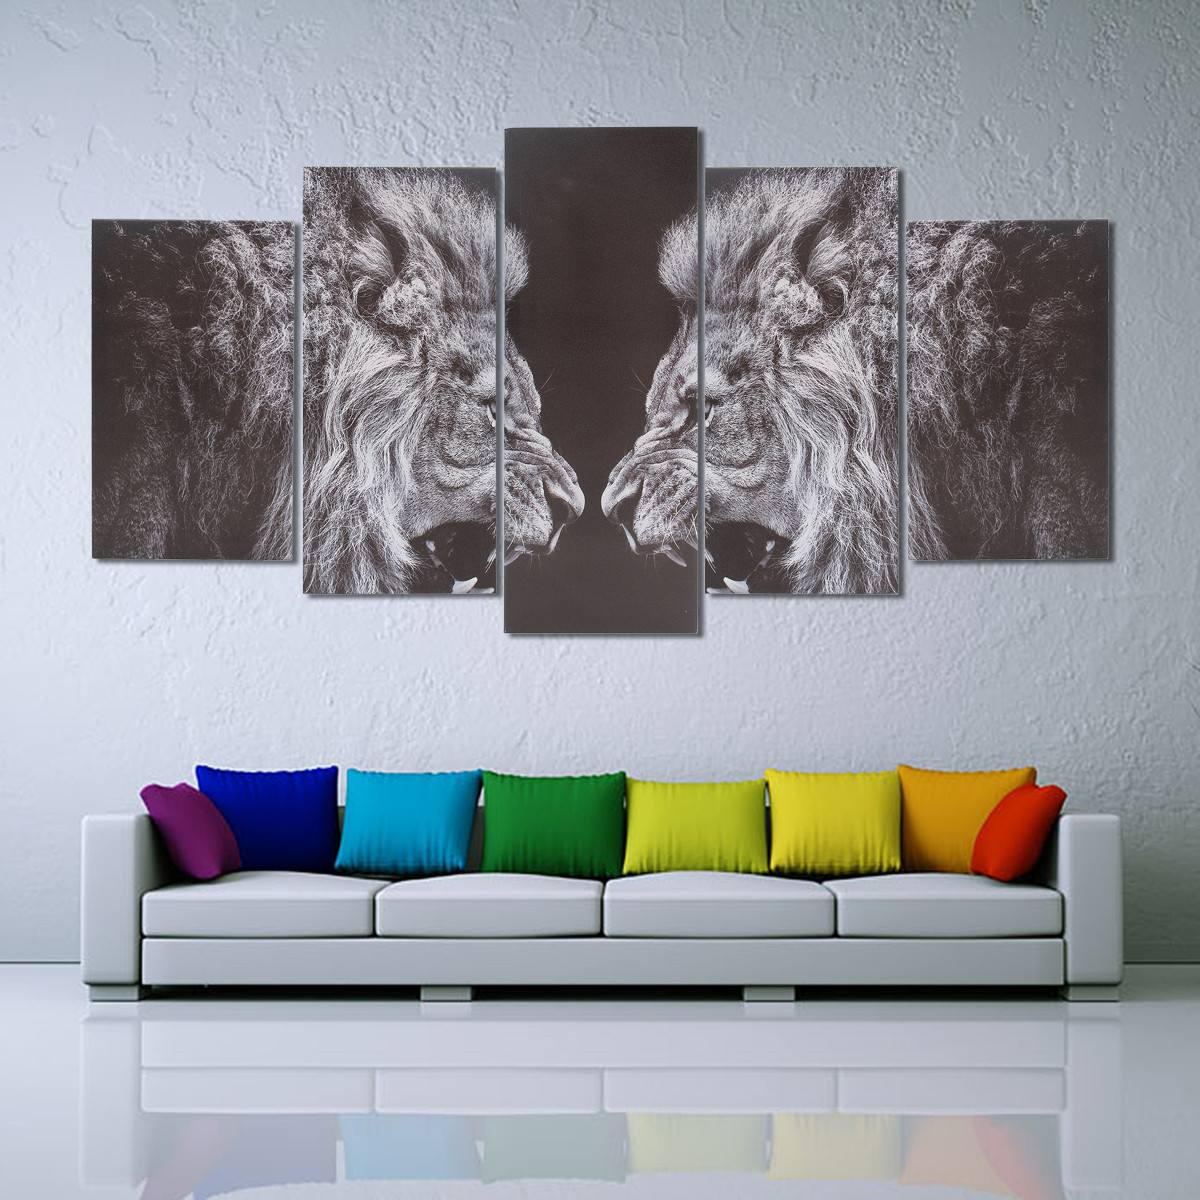 5Pcs-Black-White-Lion-Canvas-Print-Art-Painting-Wall-Picture-Home-Decor-Framed-Decorations-1114917-1